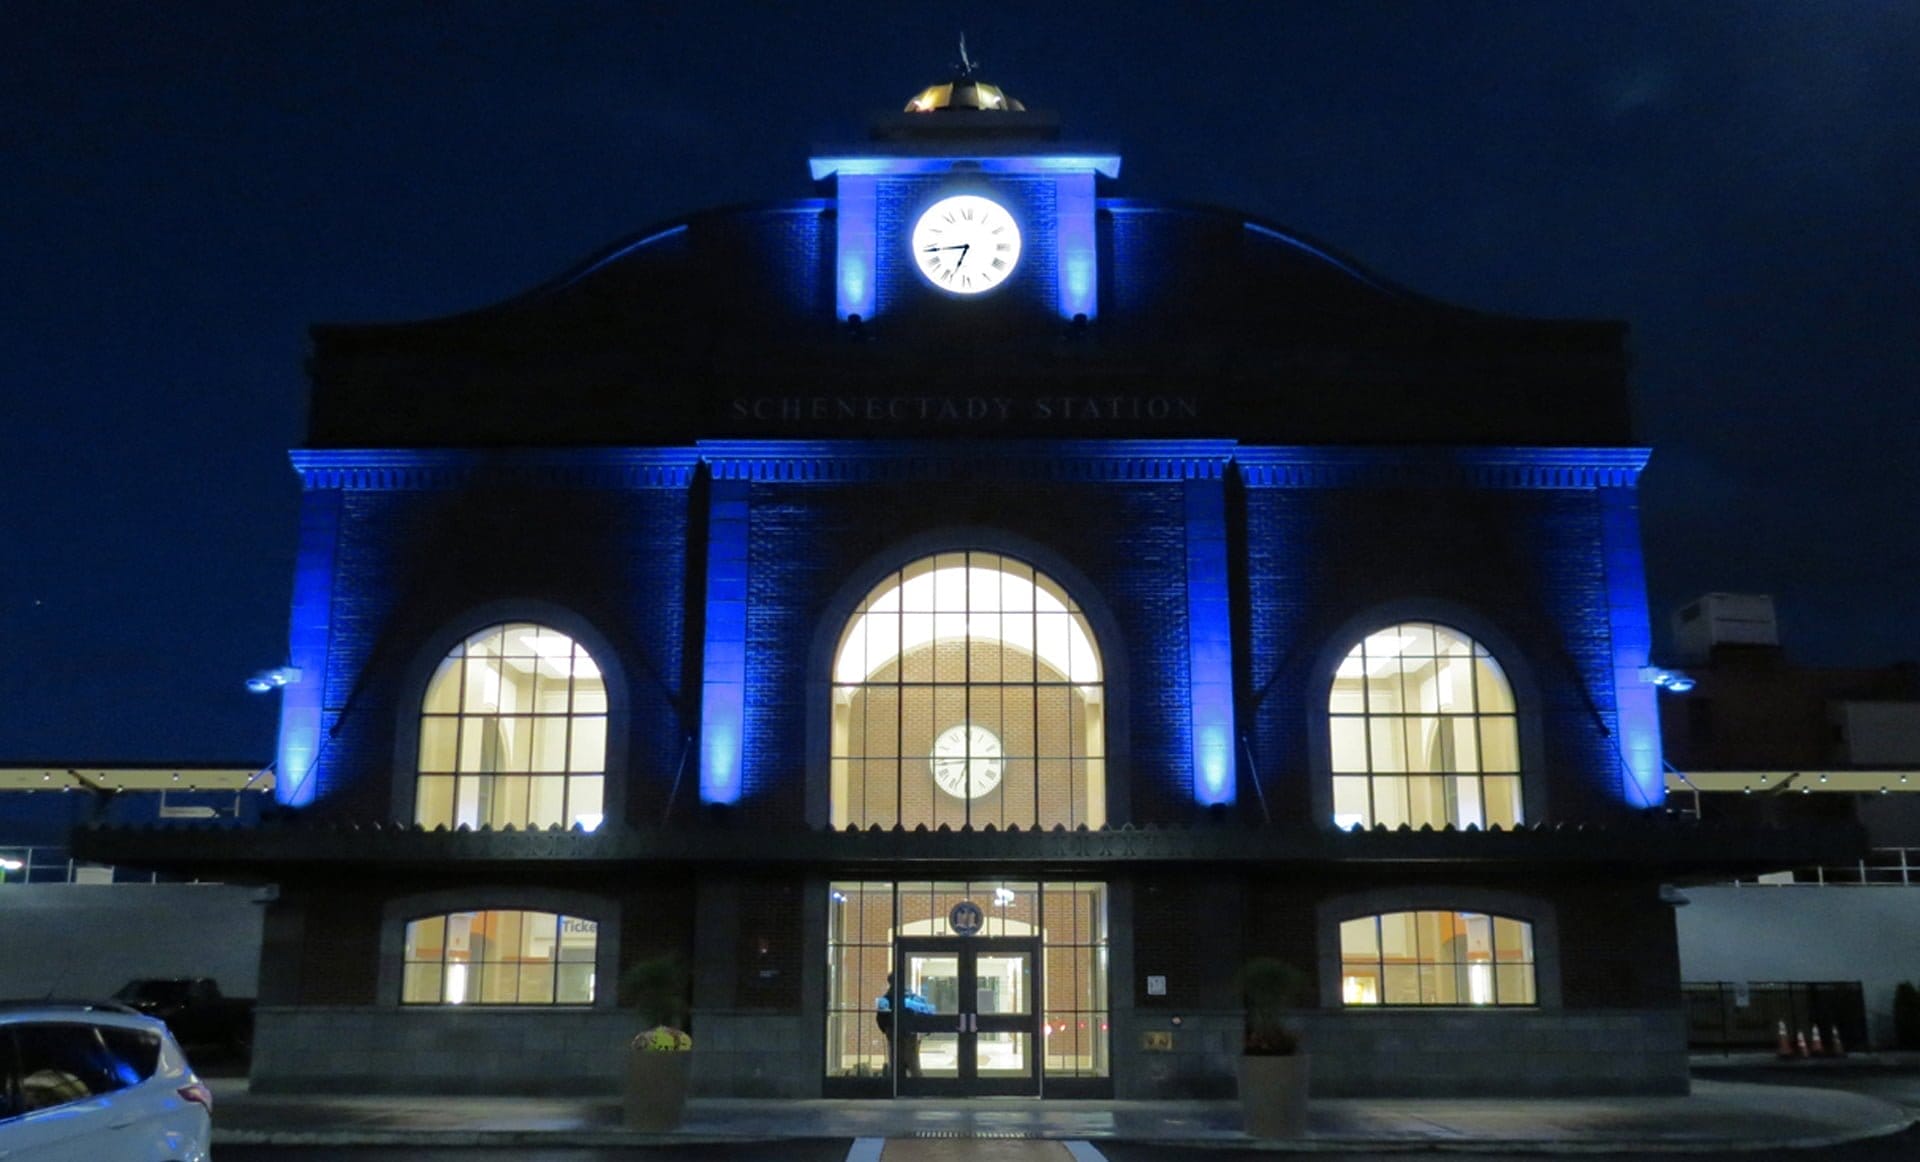 Schenectady Gets a New Station | Photo Courtesy of Ben Turon/Wikipedia